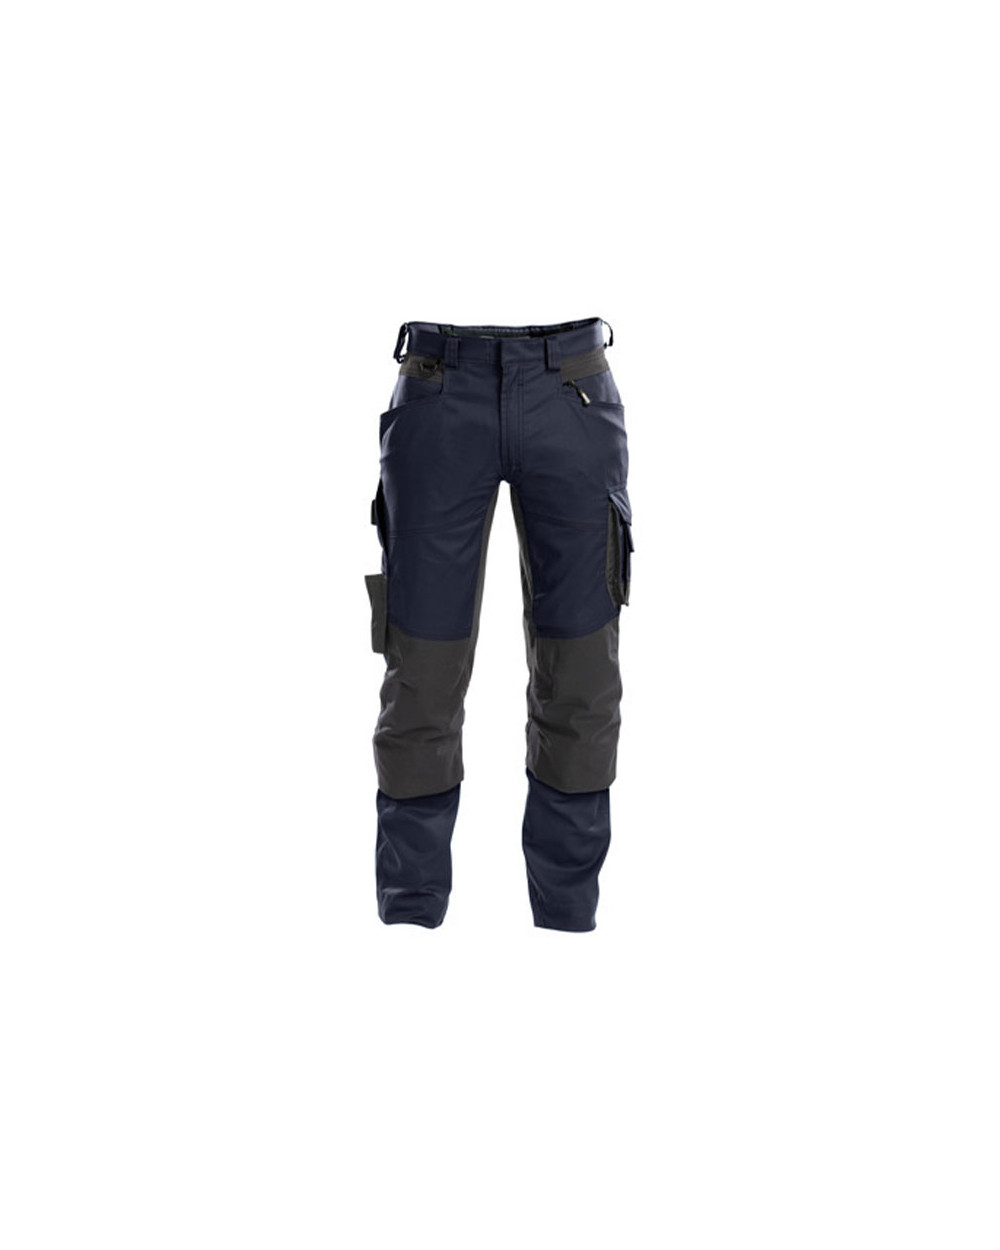 Pantalon de travail stretch Dynax Marine et gris - DASSY